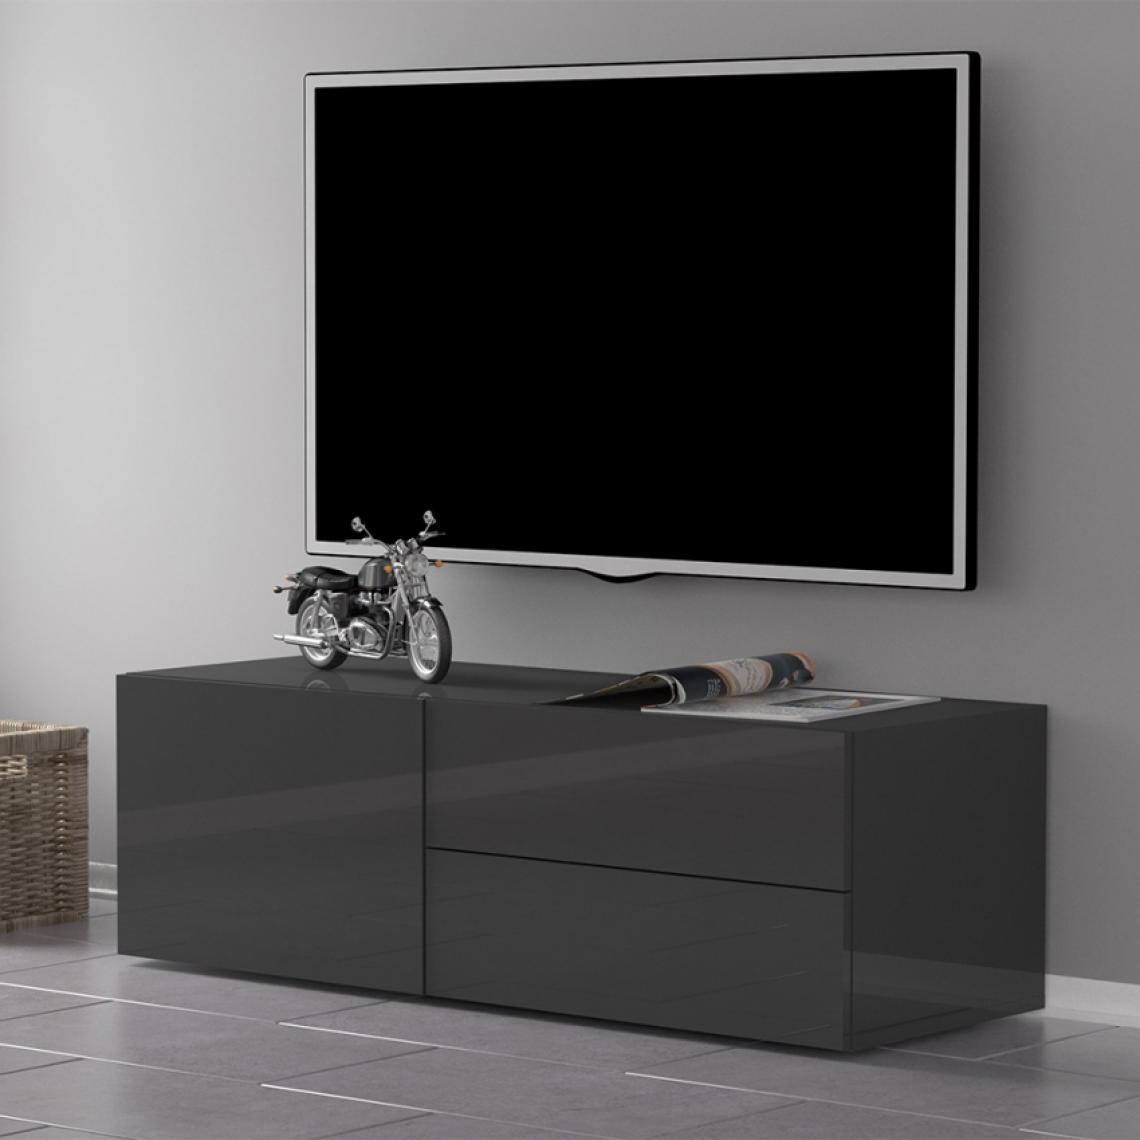 Ahd Amazing Home Design - Meuble TV Salon Compartiment 2 Tiroirs Anthracite Brillant Metis Report - Meubles TV, Hi-Fi